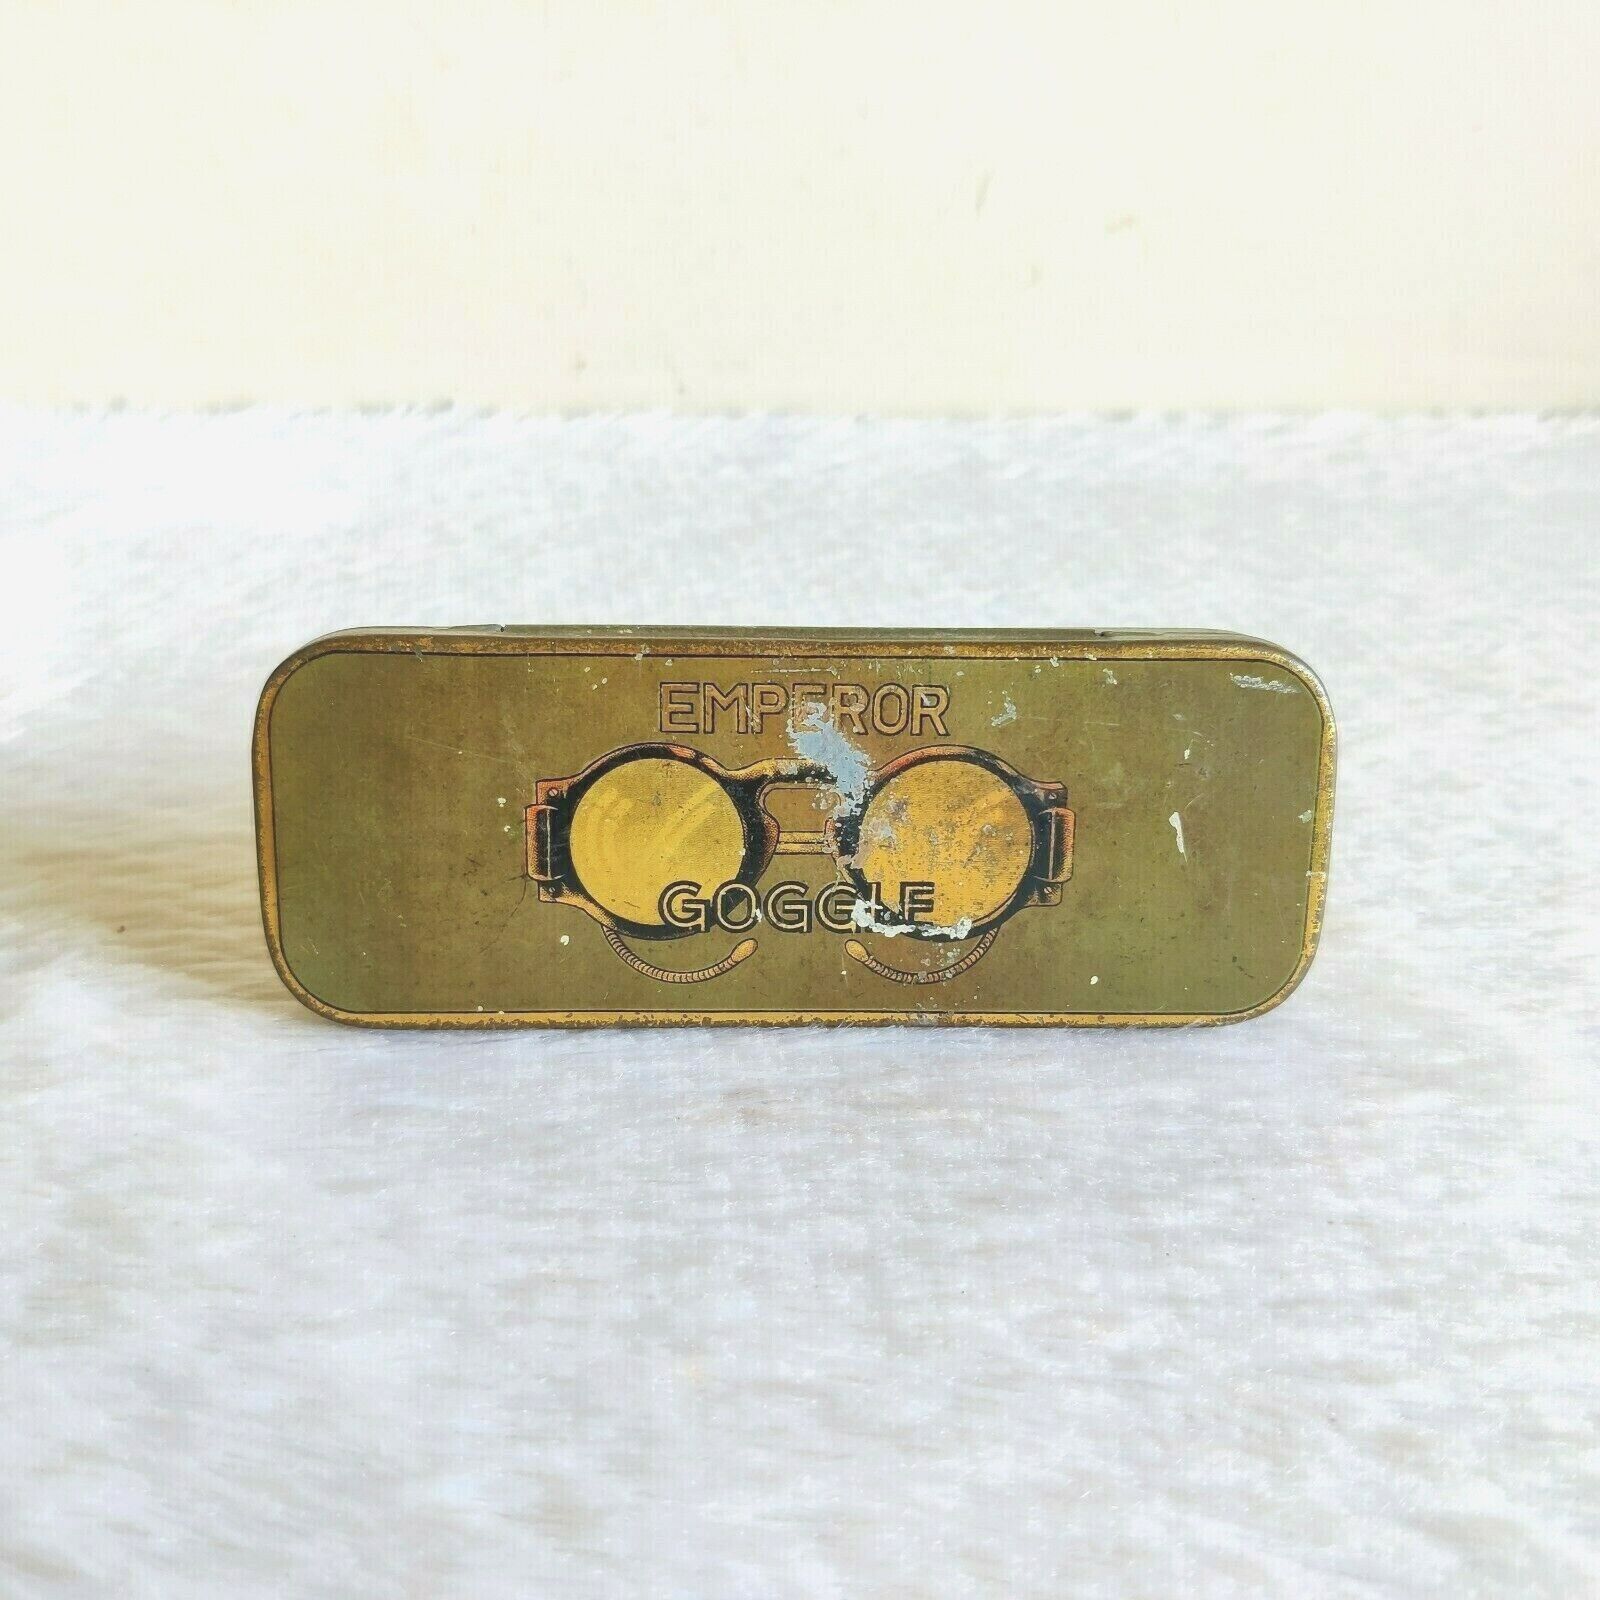 1920s Vintage Emperor Goggles Advertising Litho Tin Box Japan Collectible TB951